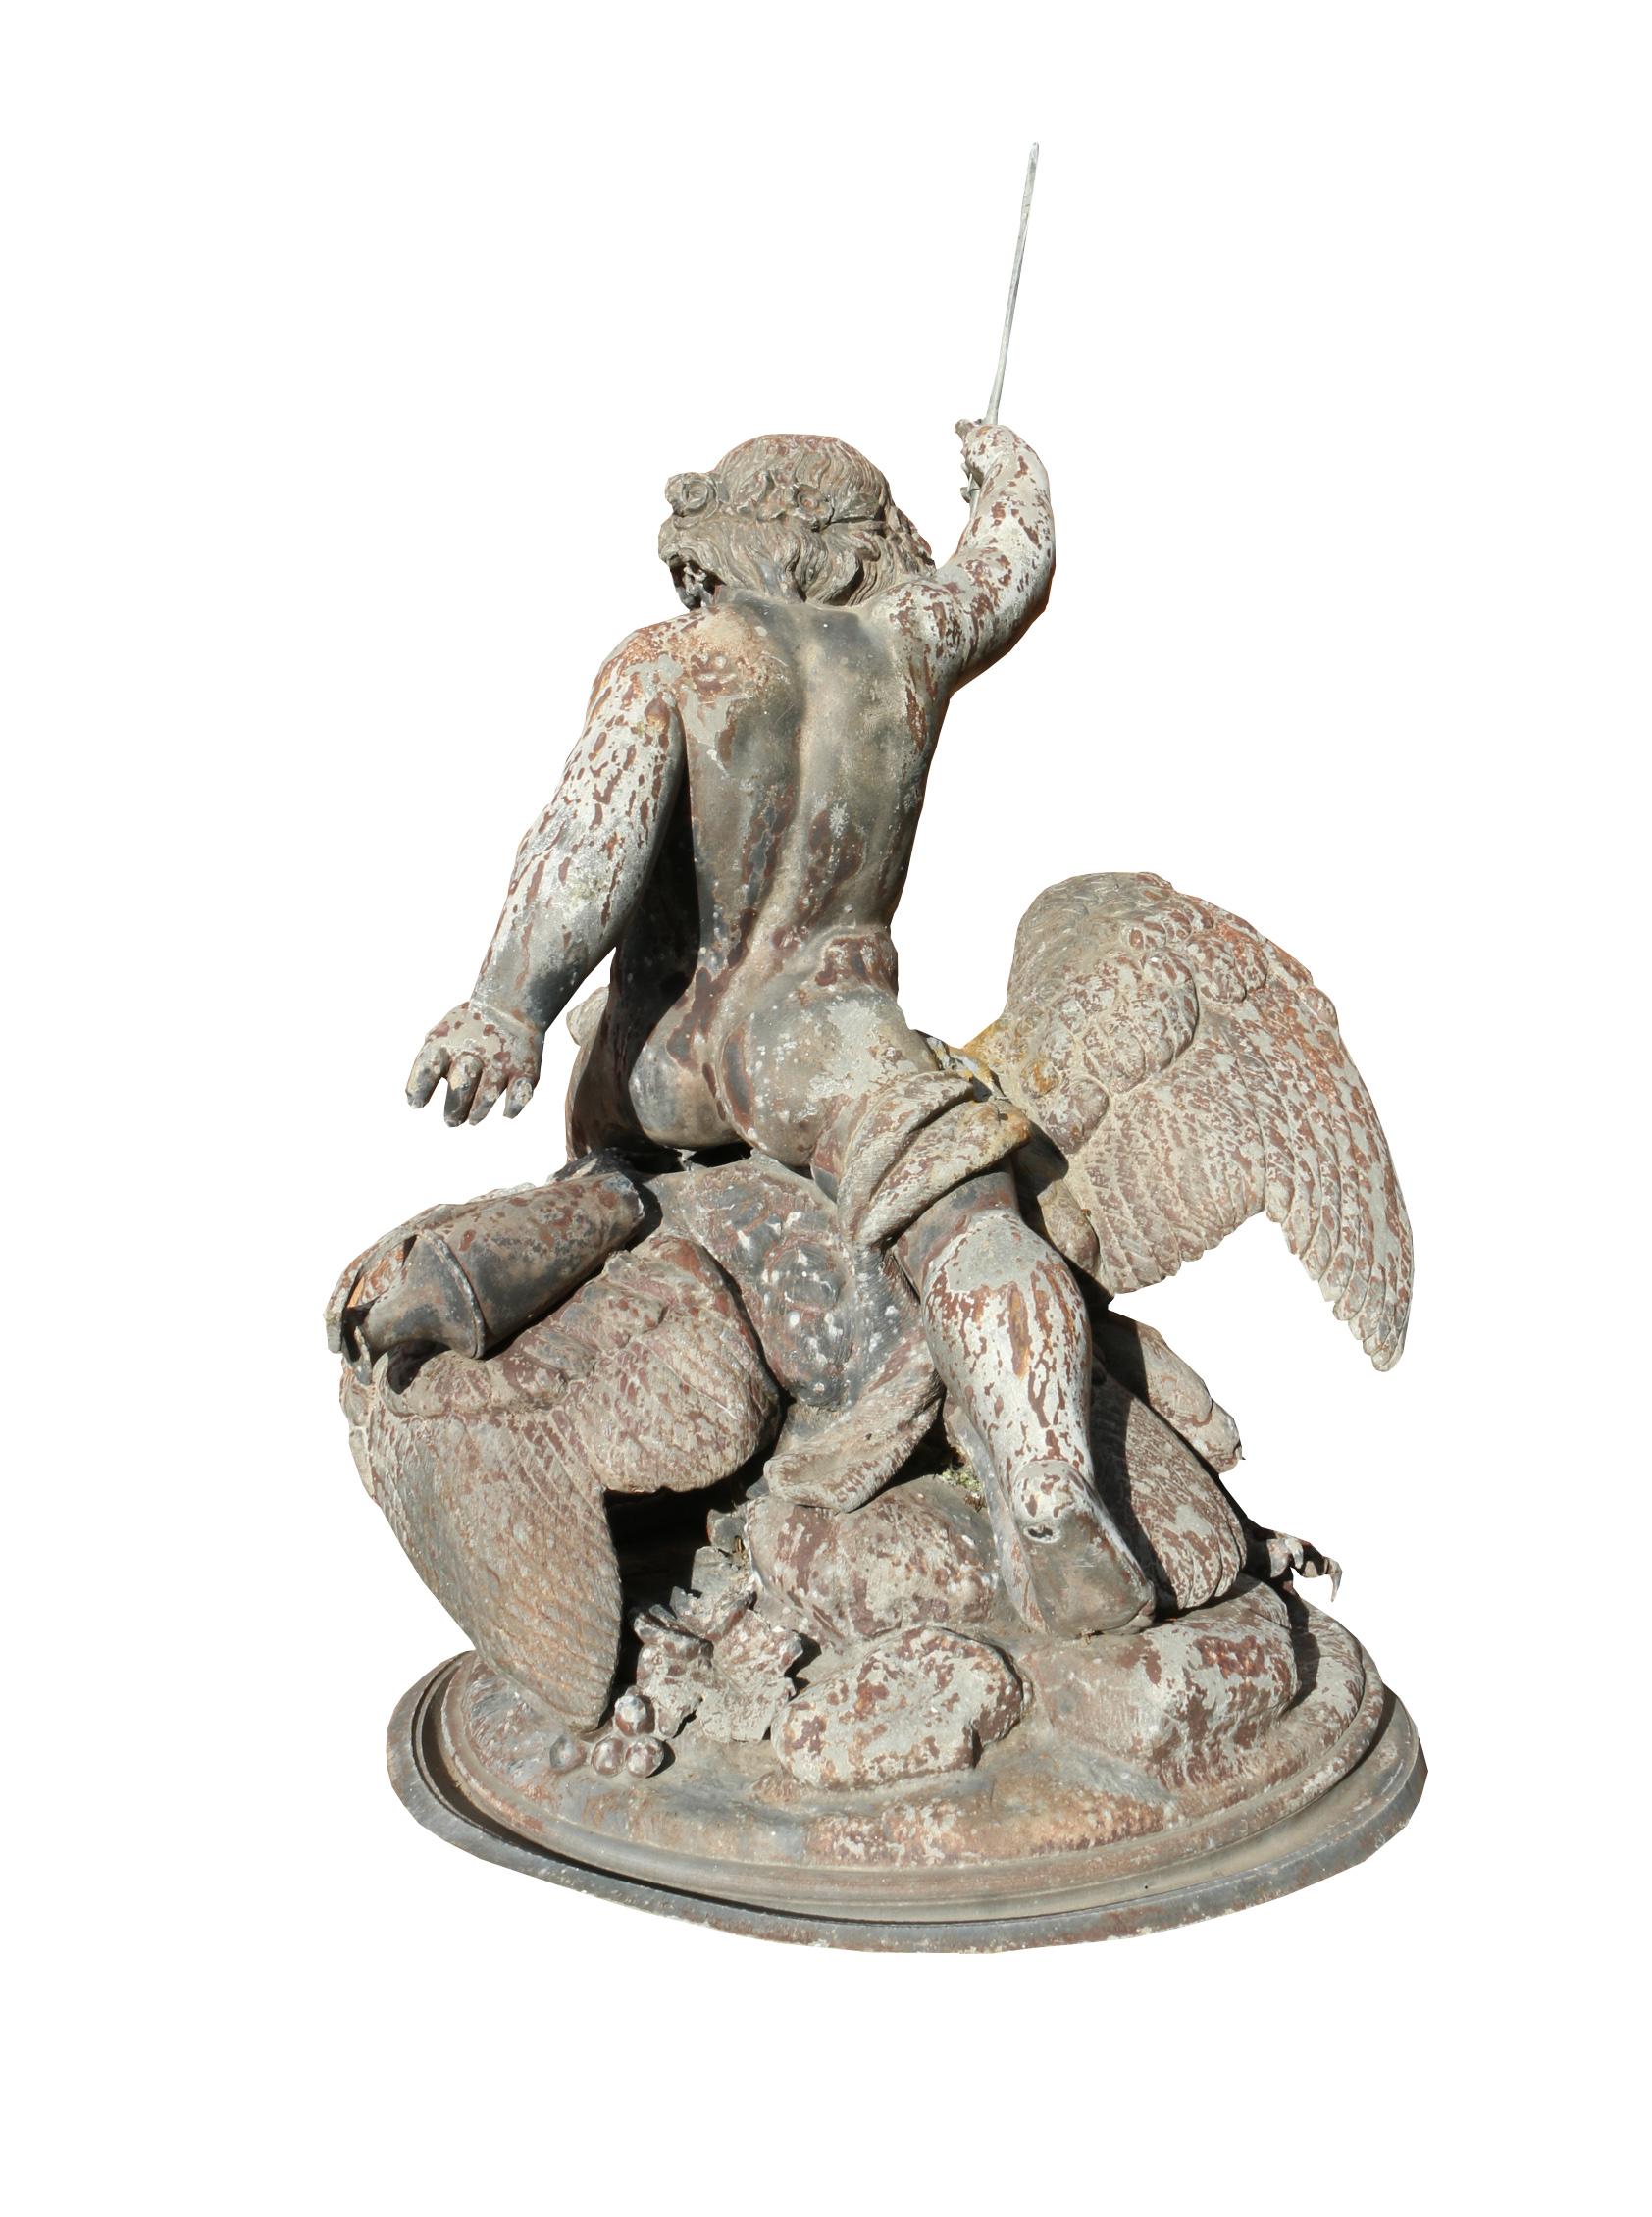 English 19th Century Cast Zinc Sculpture, Putti Riding an Eagle